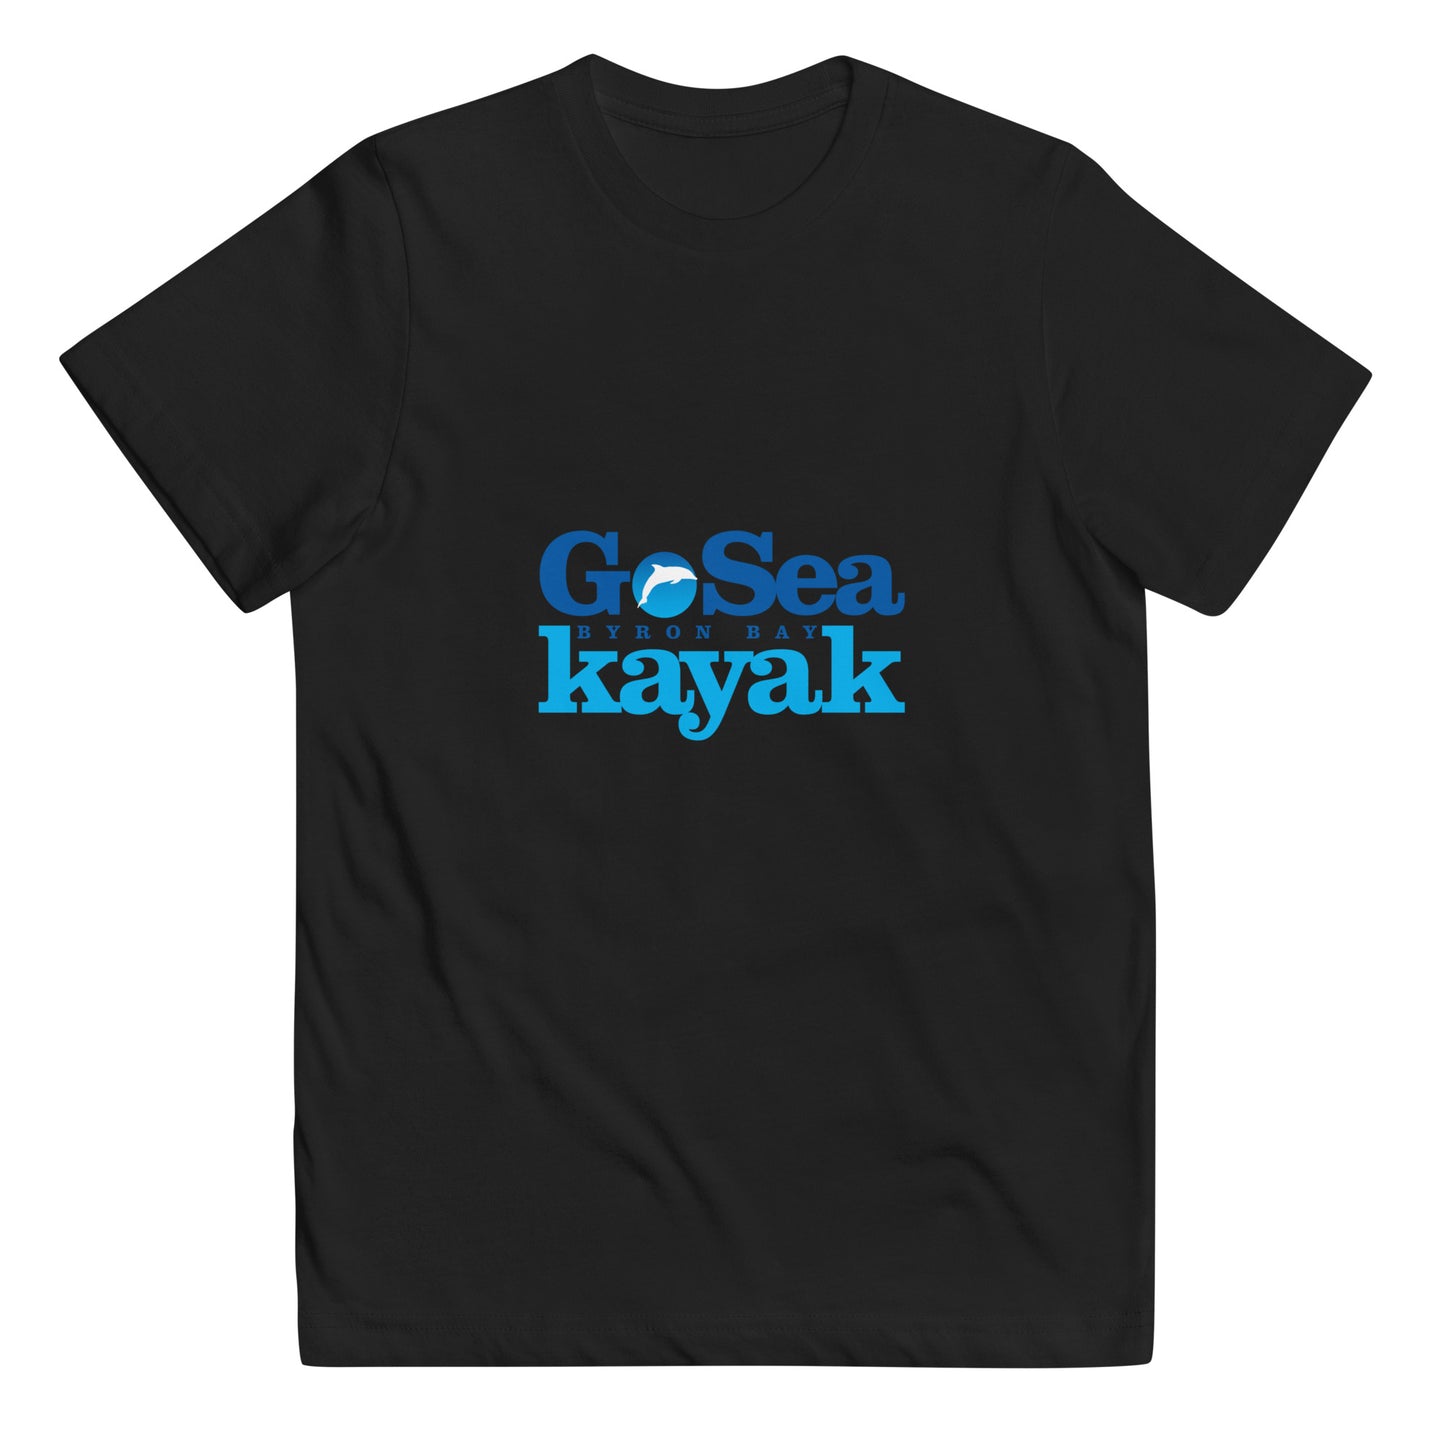  Kids T-Shirt - Black  - Front flat lay view - Go Sea Kayak Byron Bay logo on front - Genuine Byron Bay Merchandise | Produced by Go Sea Kayak Byron Bay 